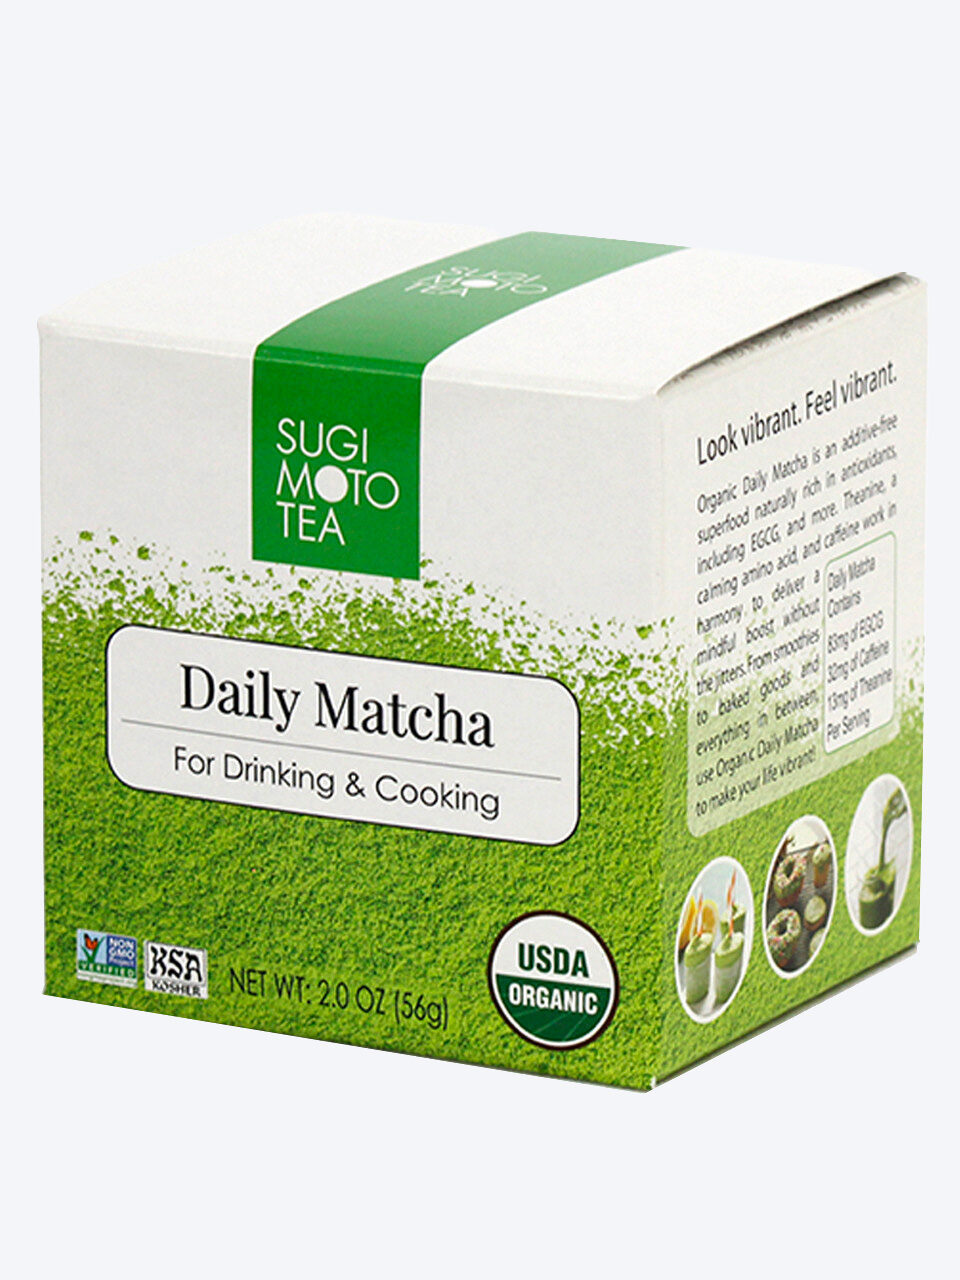 Matcha tea from Sugimoto Tea